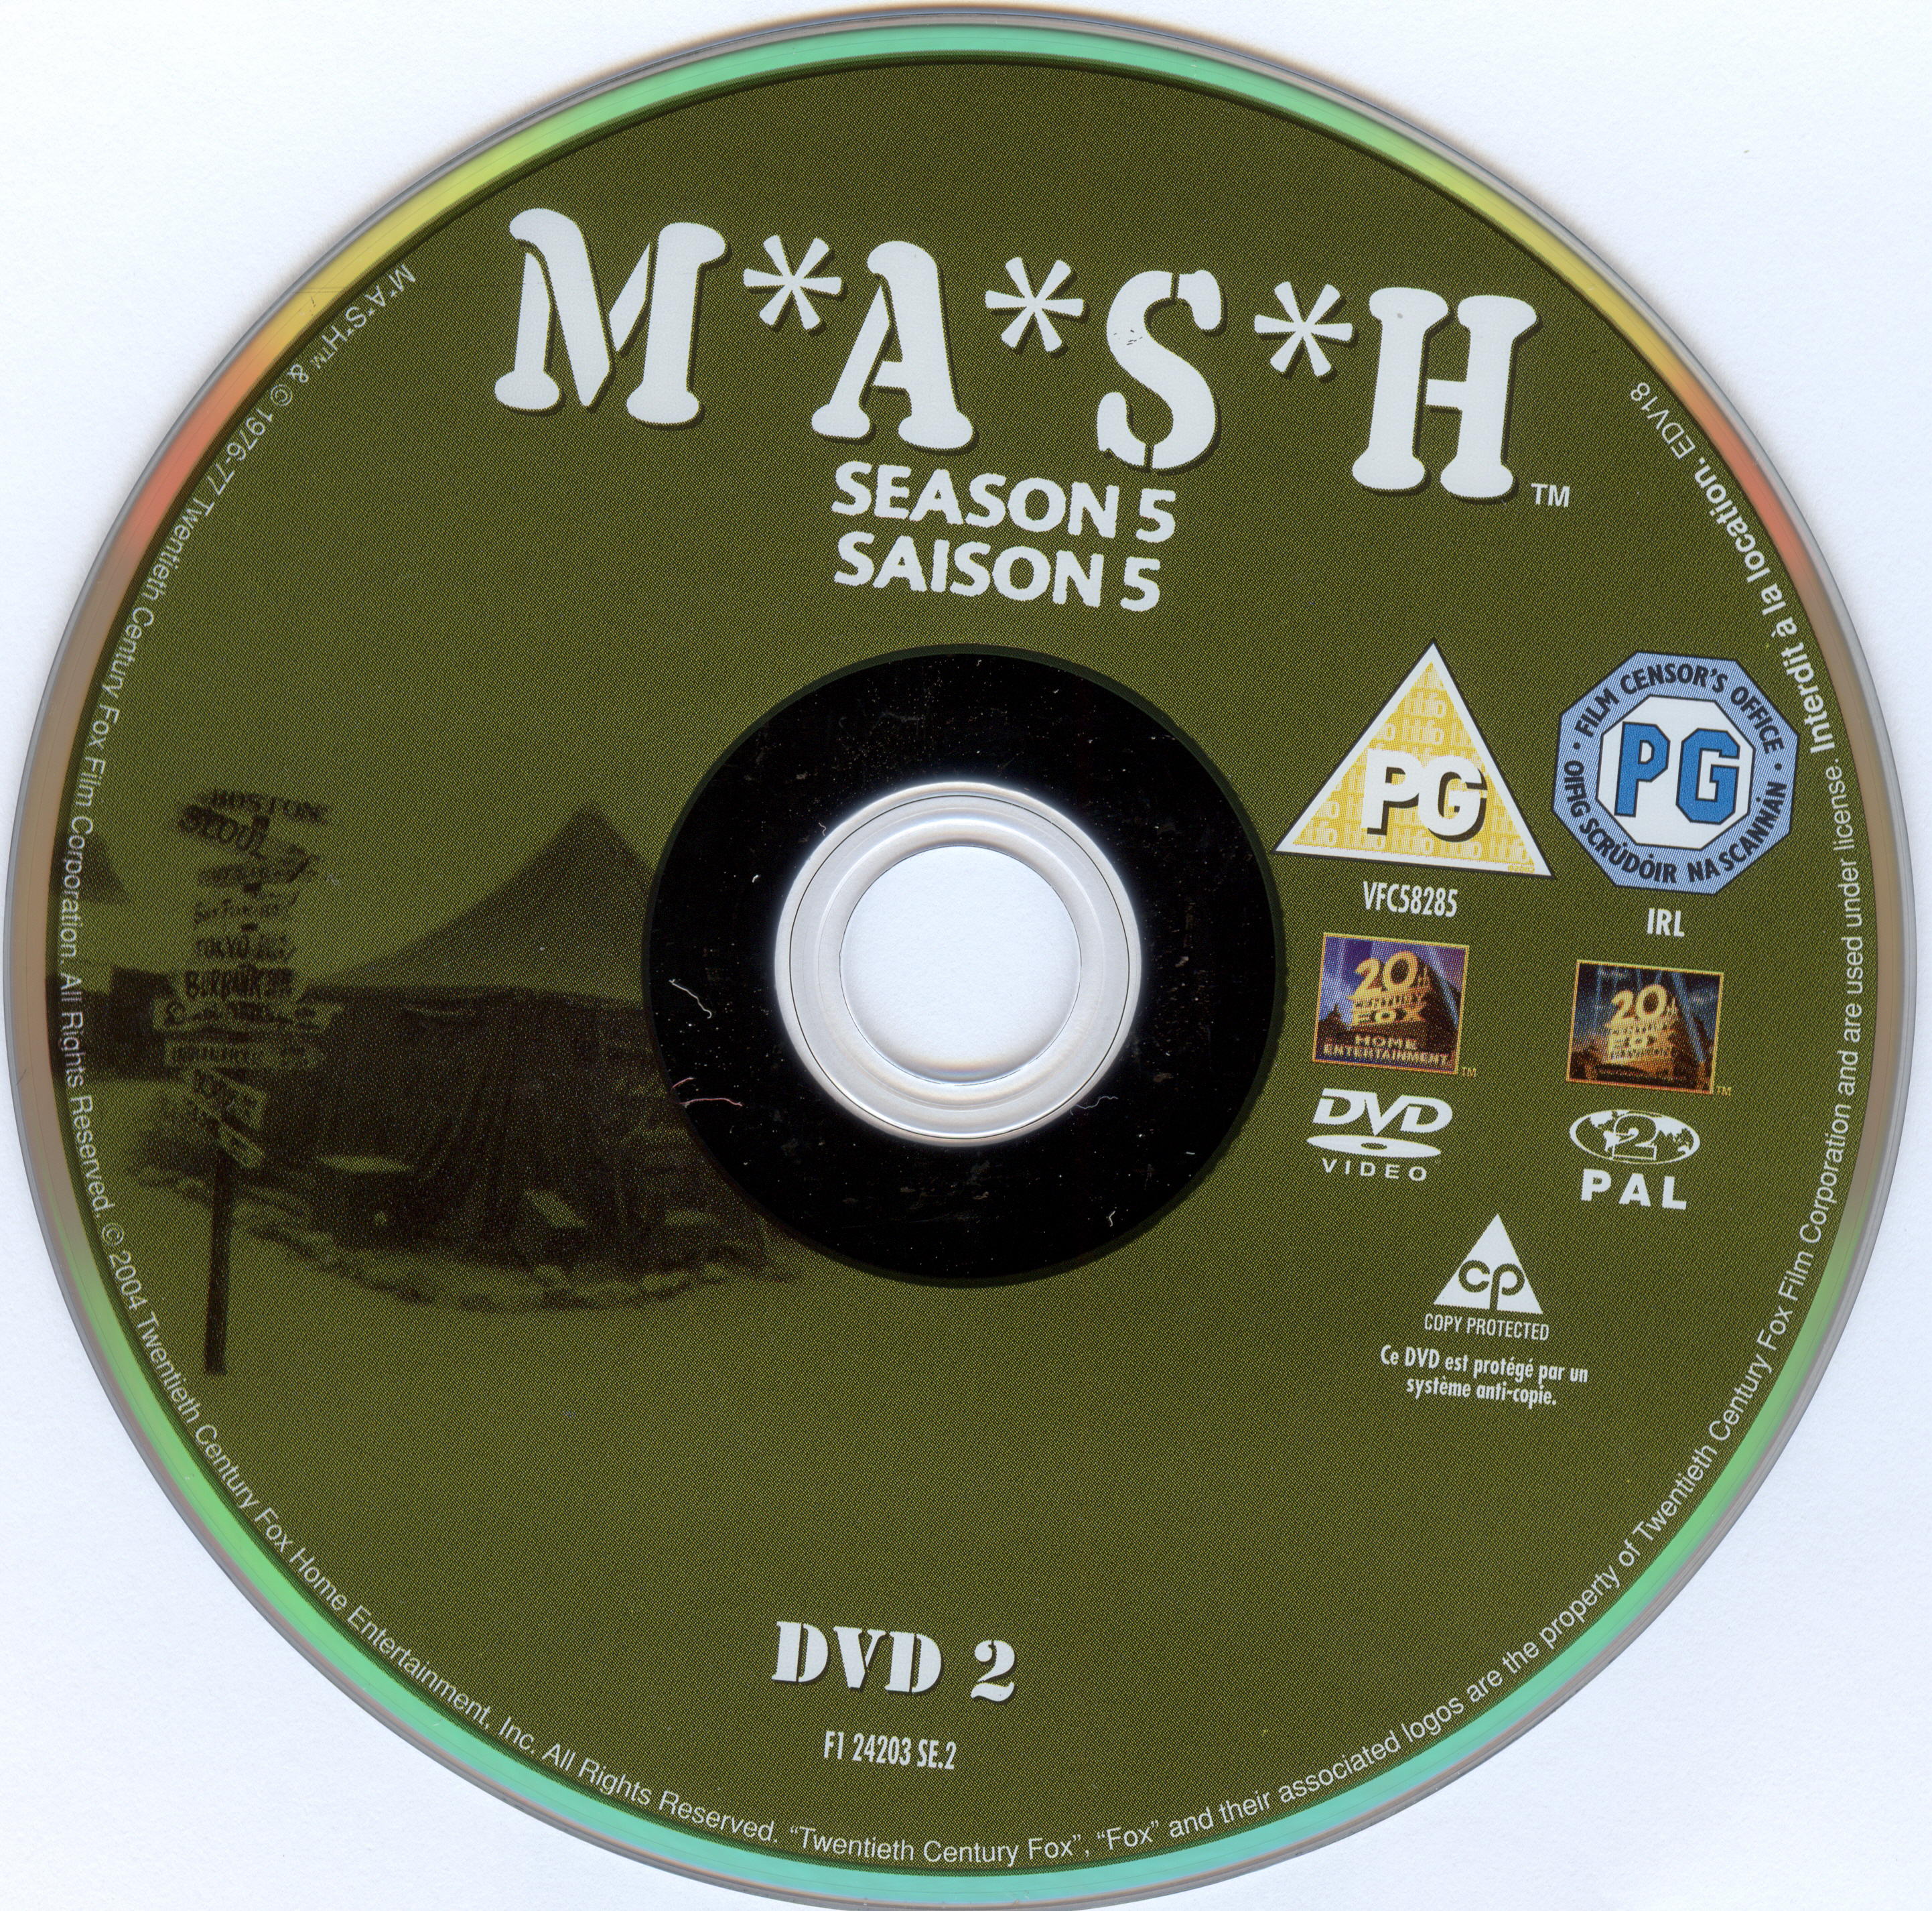 MASH Saison 5 DVD 2